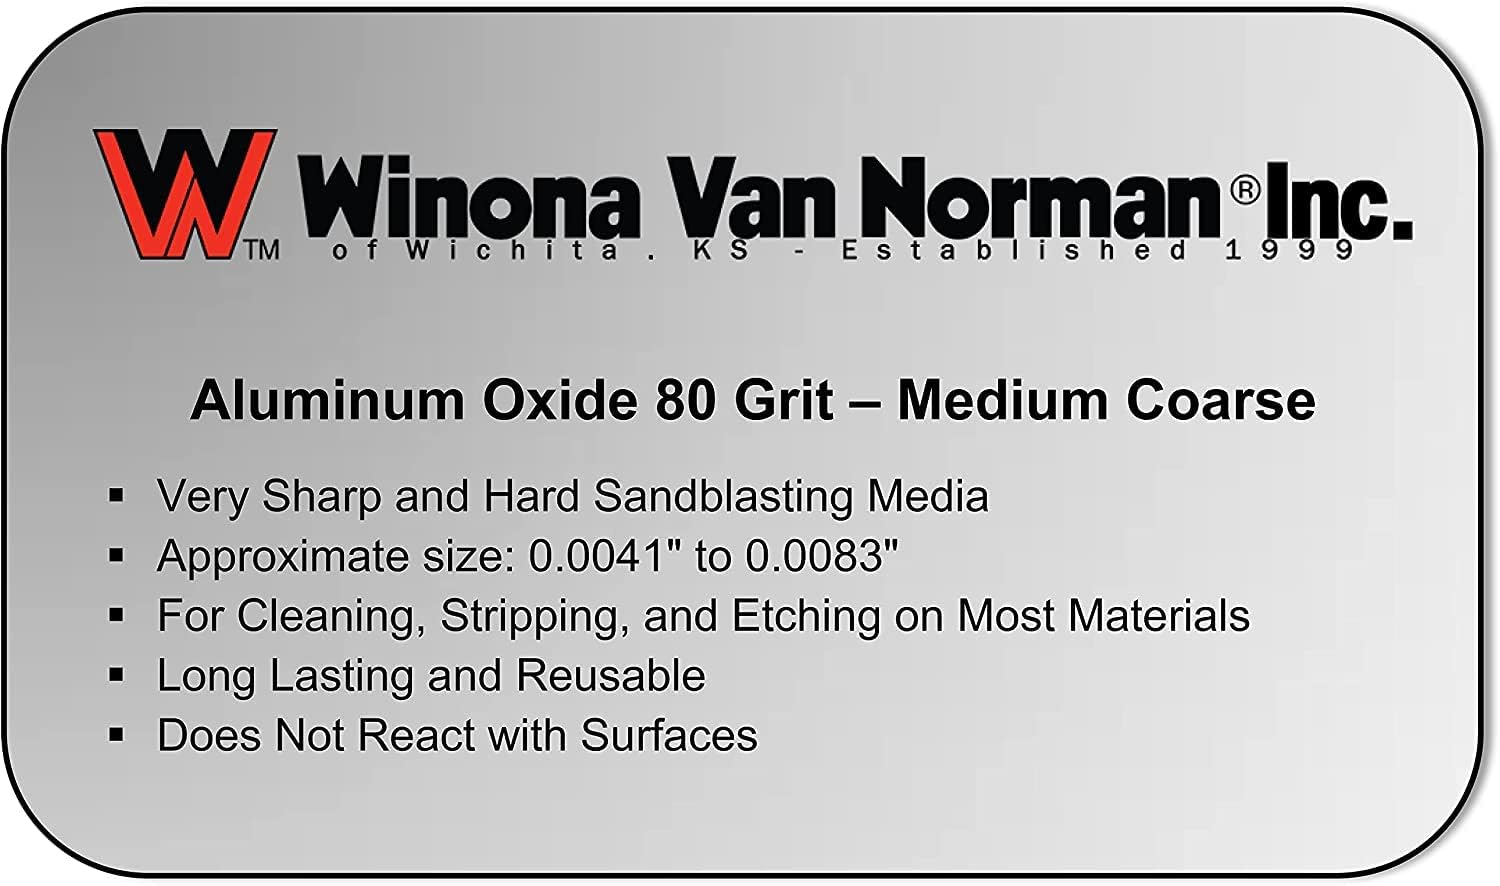 Generic Aluminum Oxide Sand Blasting Media - 80 Grit - Medium Coarse (50lbs)